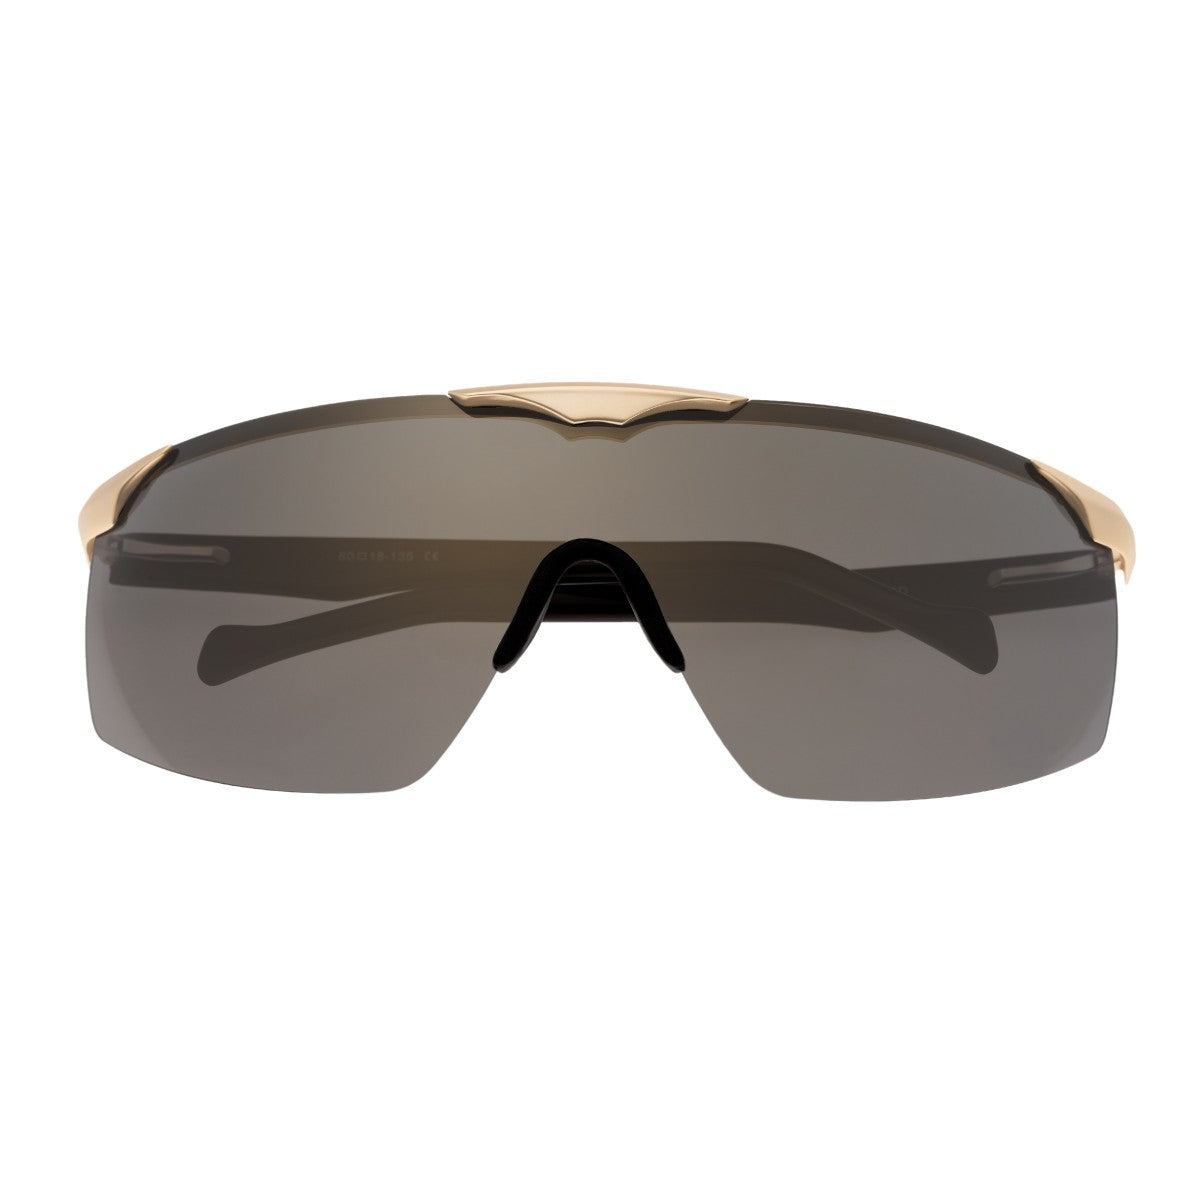 Sixty One Shore Polarized Sunglasses - Gold/Black - SIXS131GD